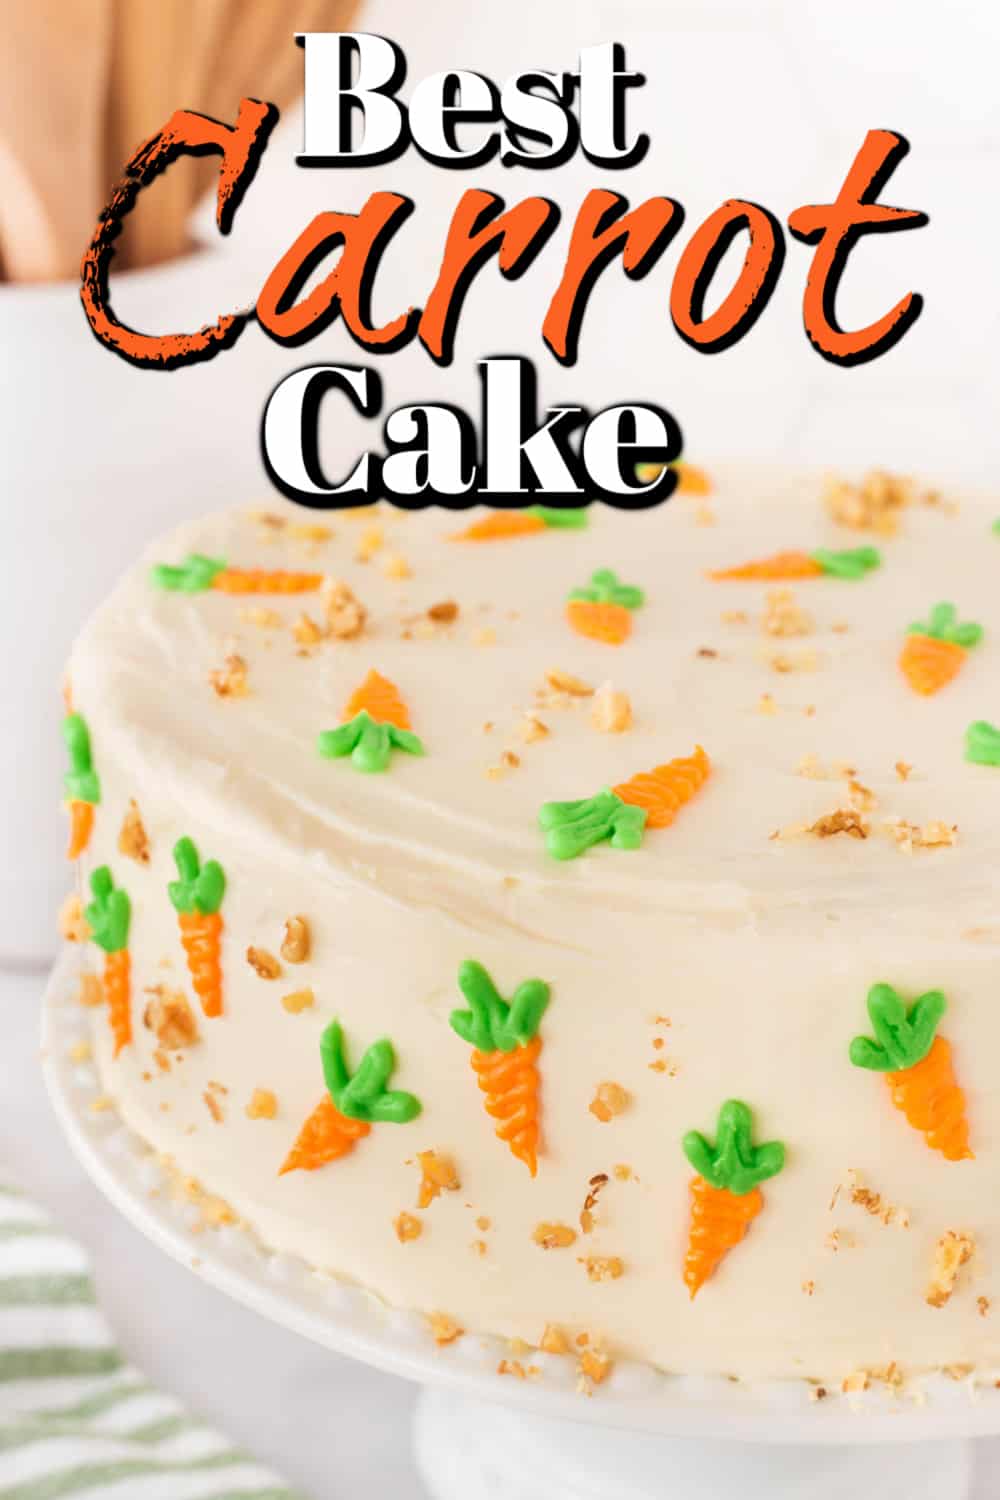 Best Carrot Cake Recipe Pin